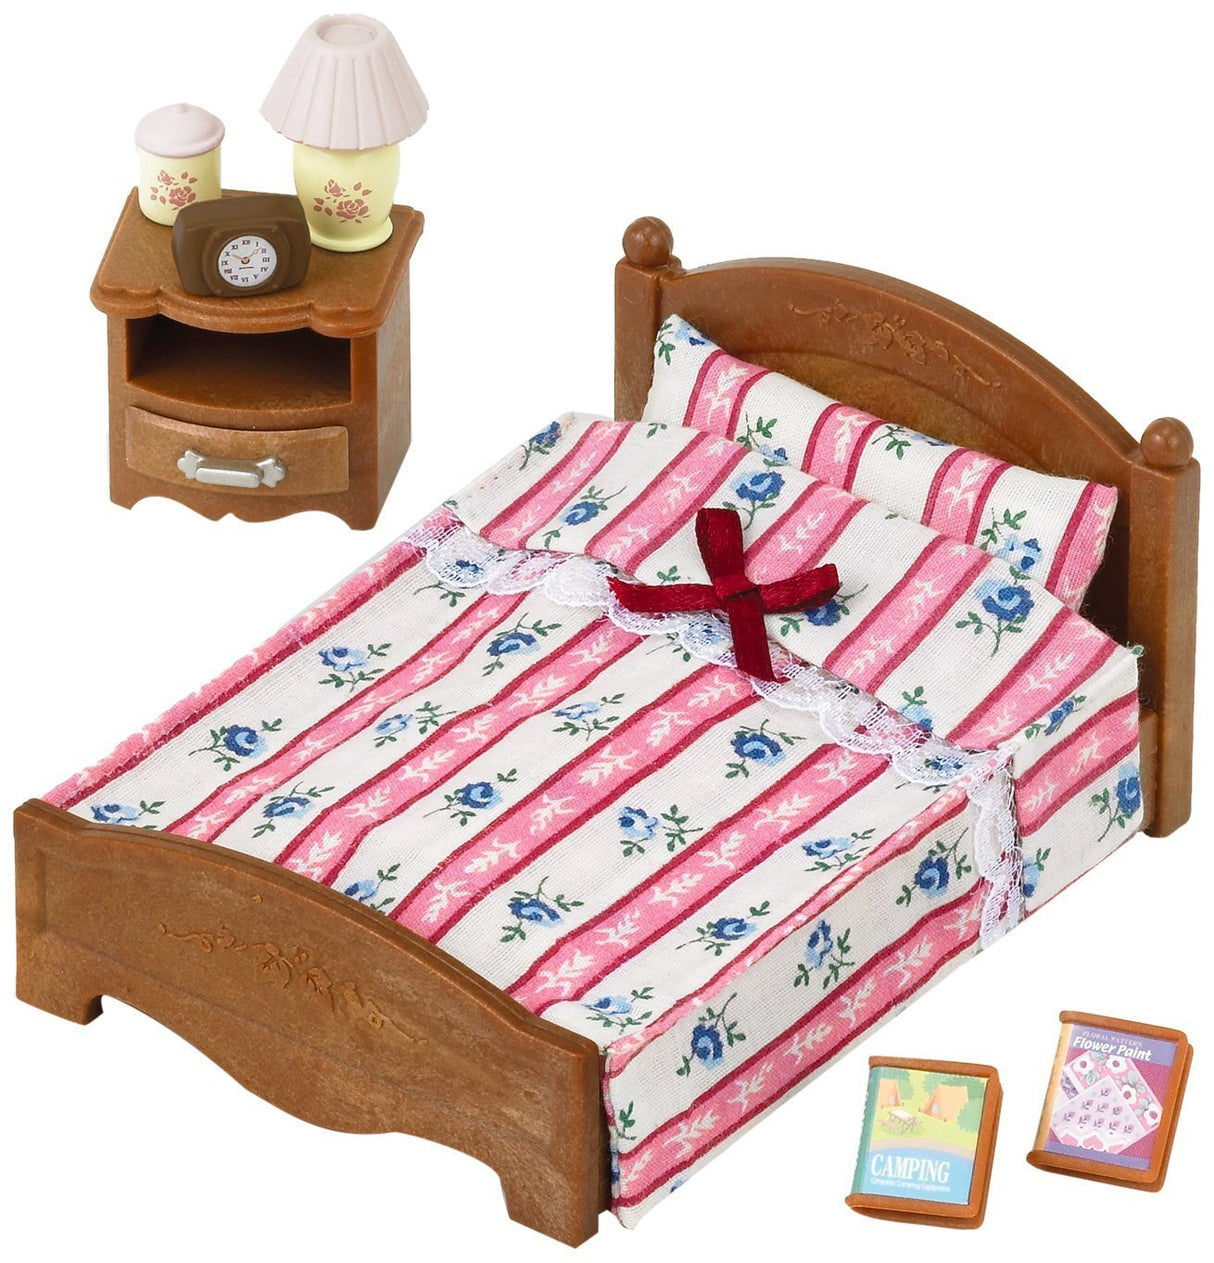 Sylvanian Families 5019 Semi-double Bed - Hobbytech Toys